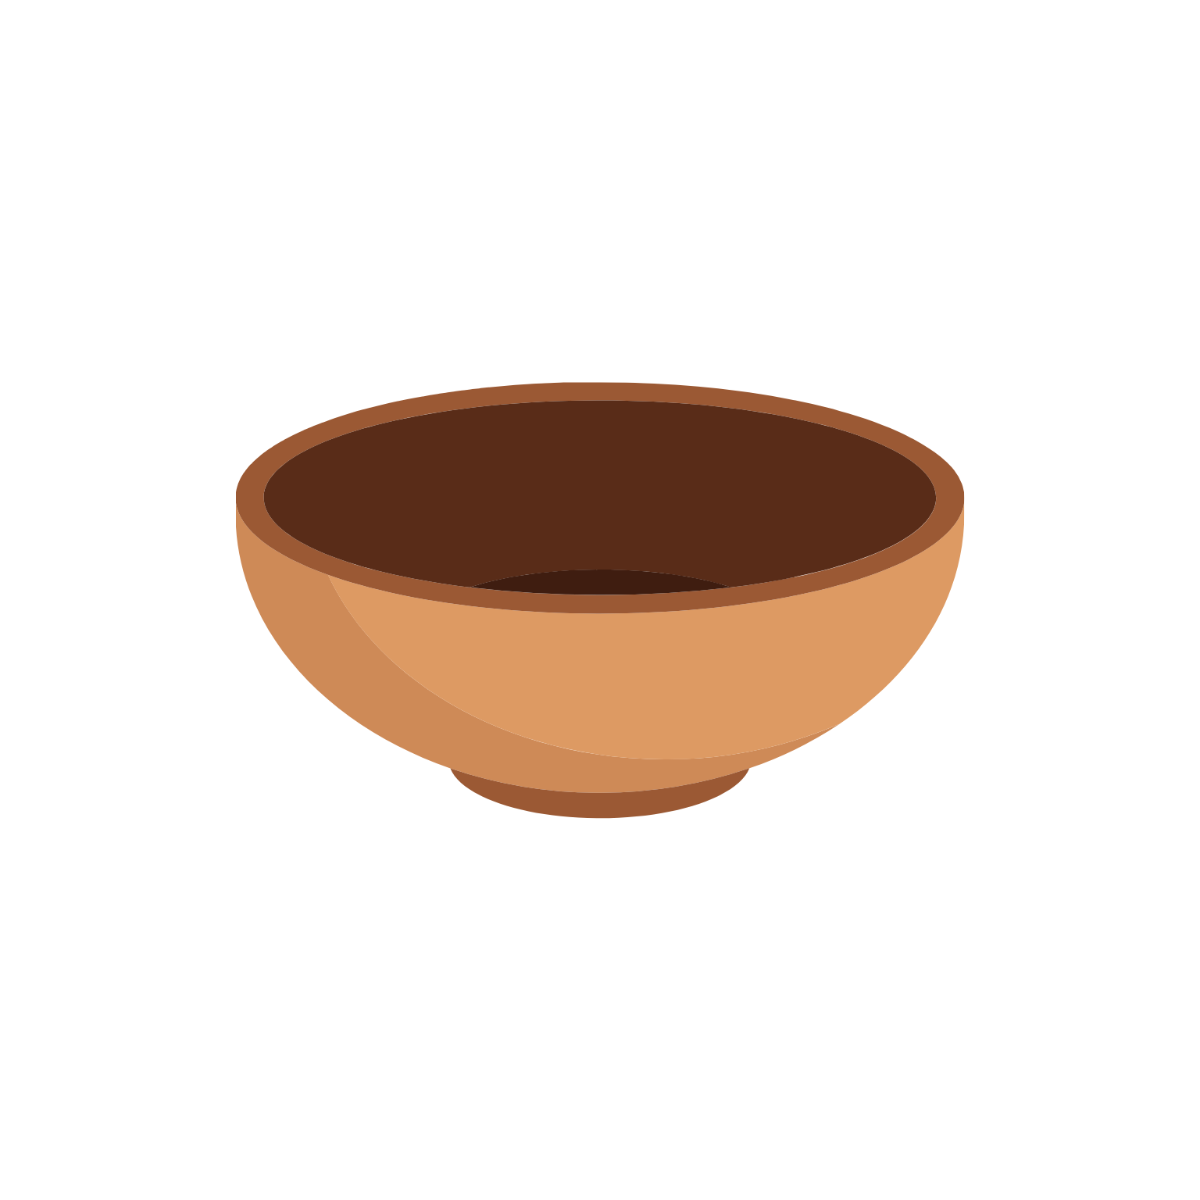 Empty Clay Bowl